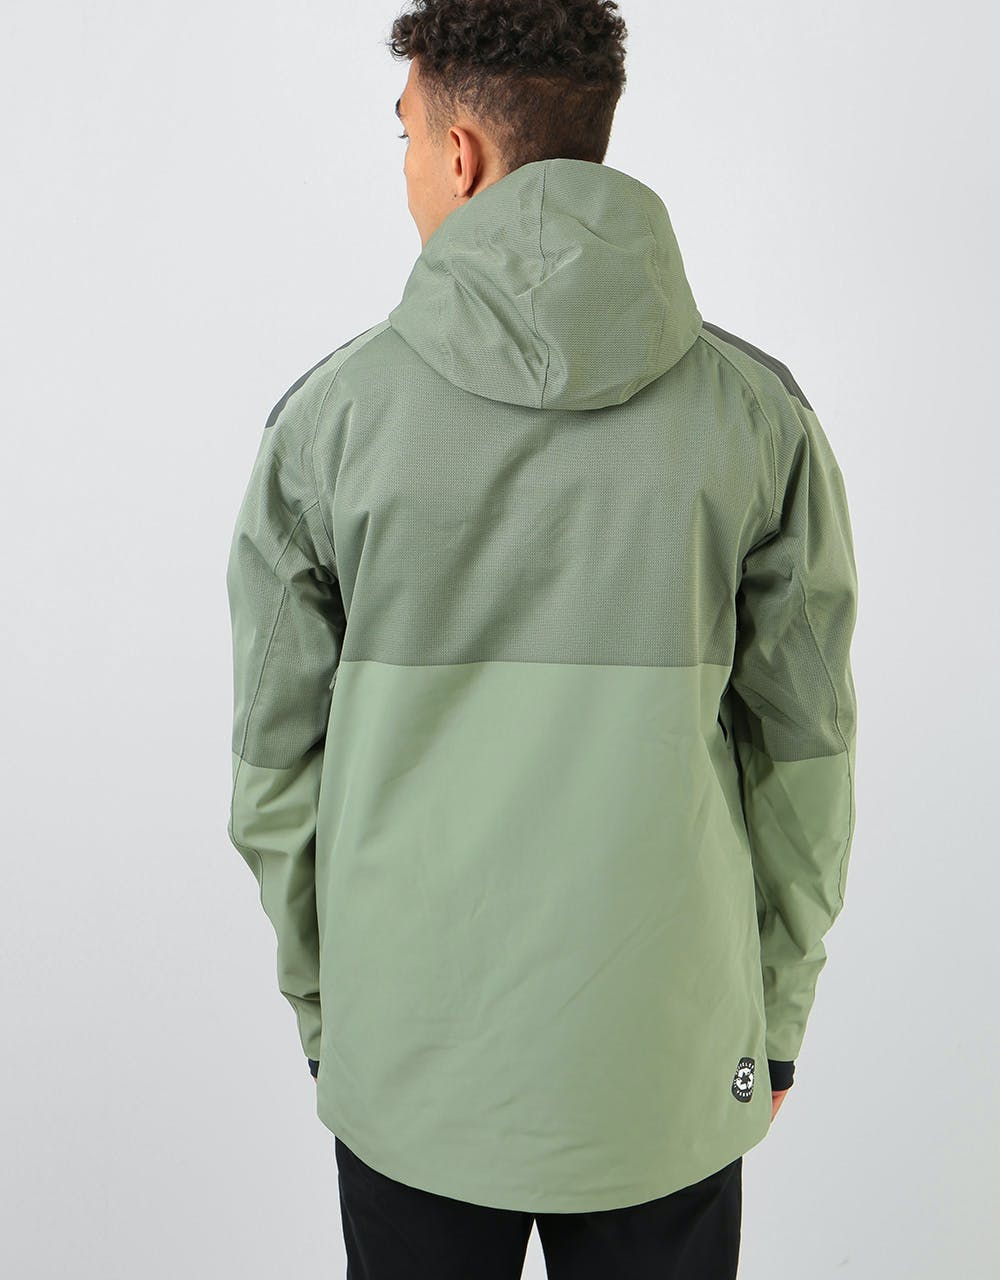 Picture Goods 2020 Snowboard Jacket - Dark Army Green